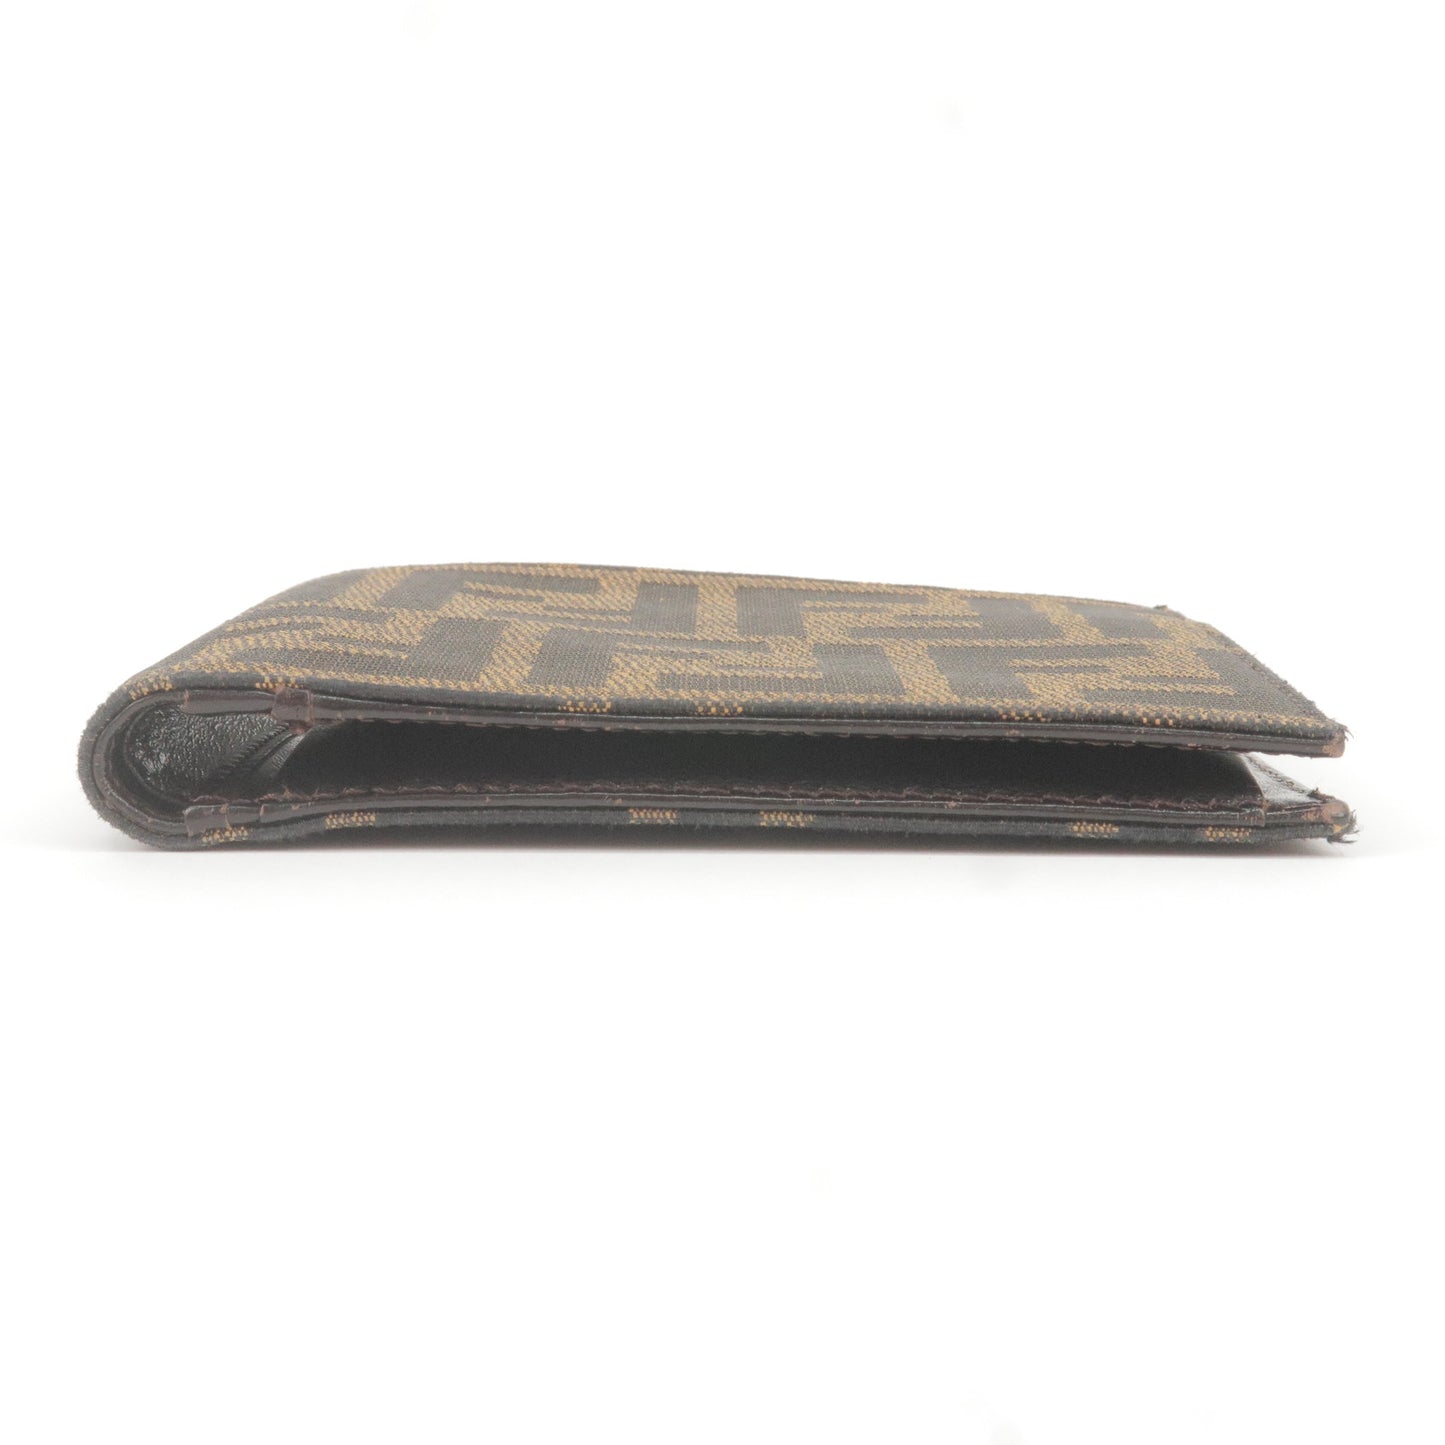 FENDI Zucca Canvas Leather Bi-Fold Wallet Brown Black 7M0001